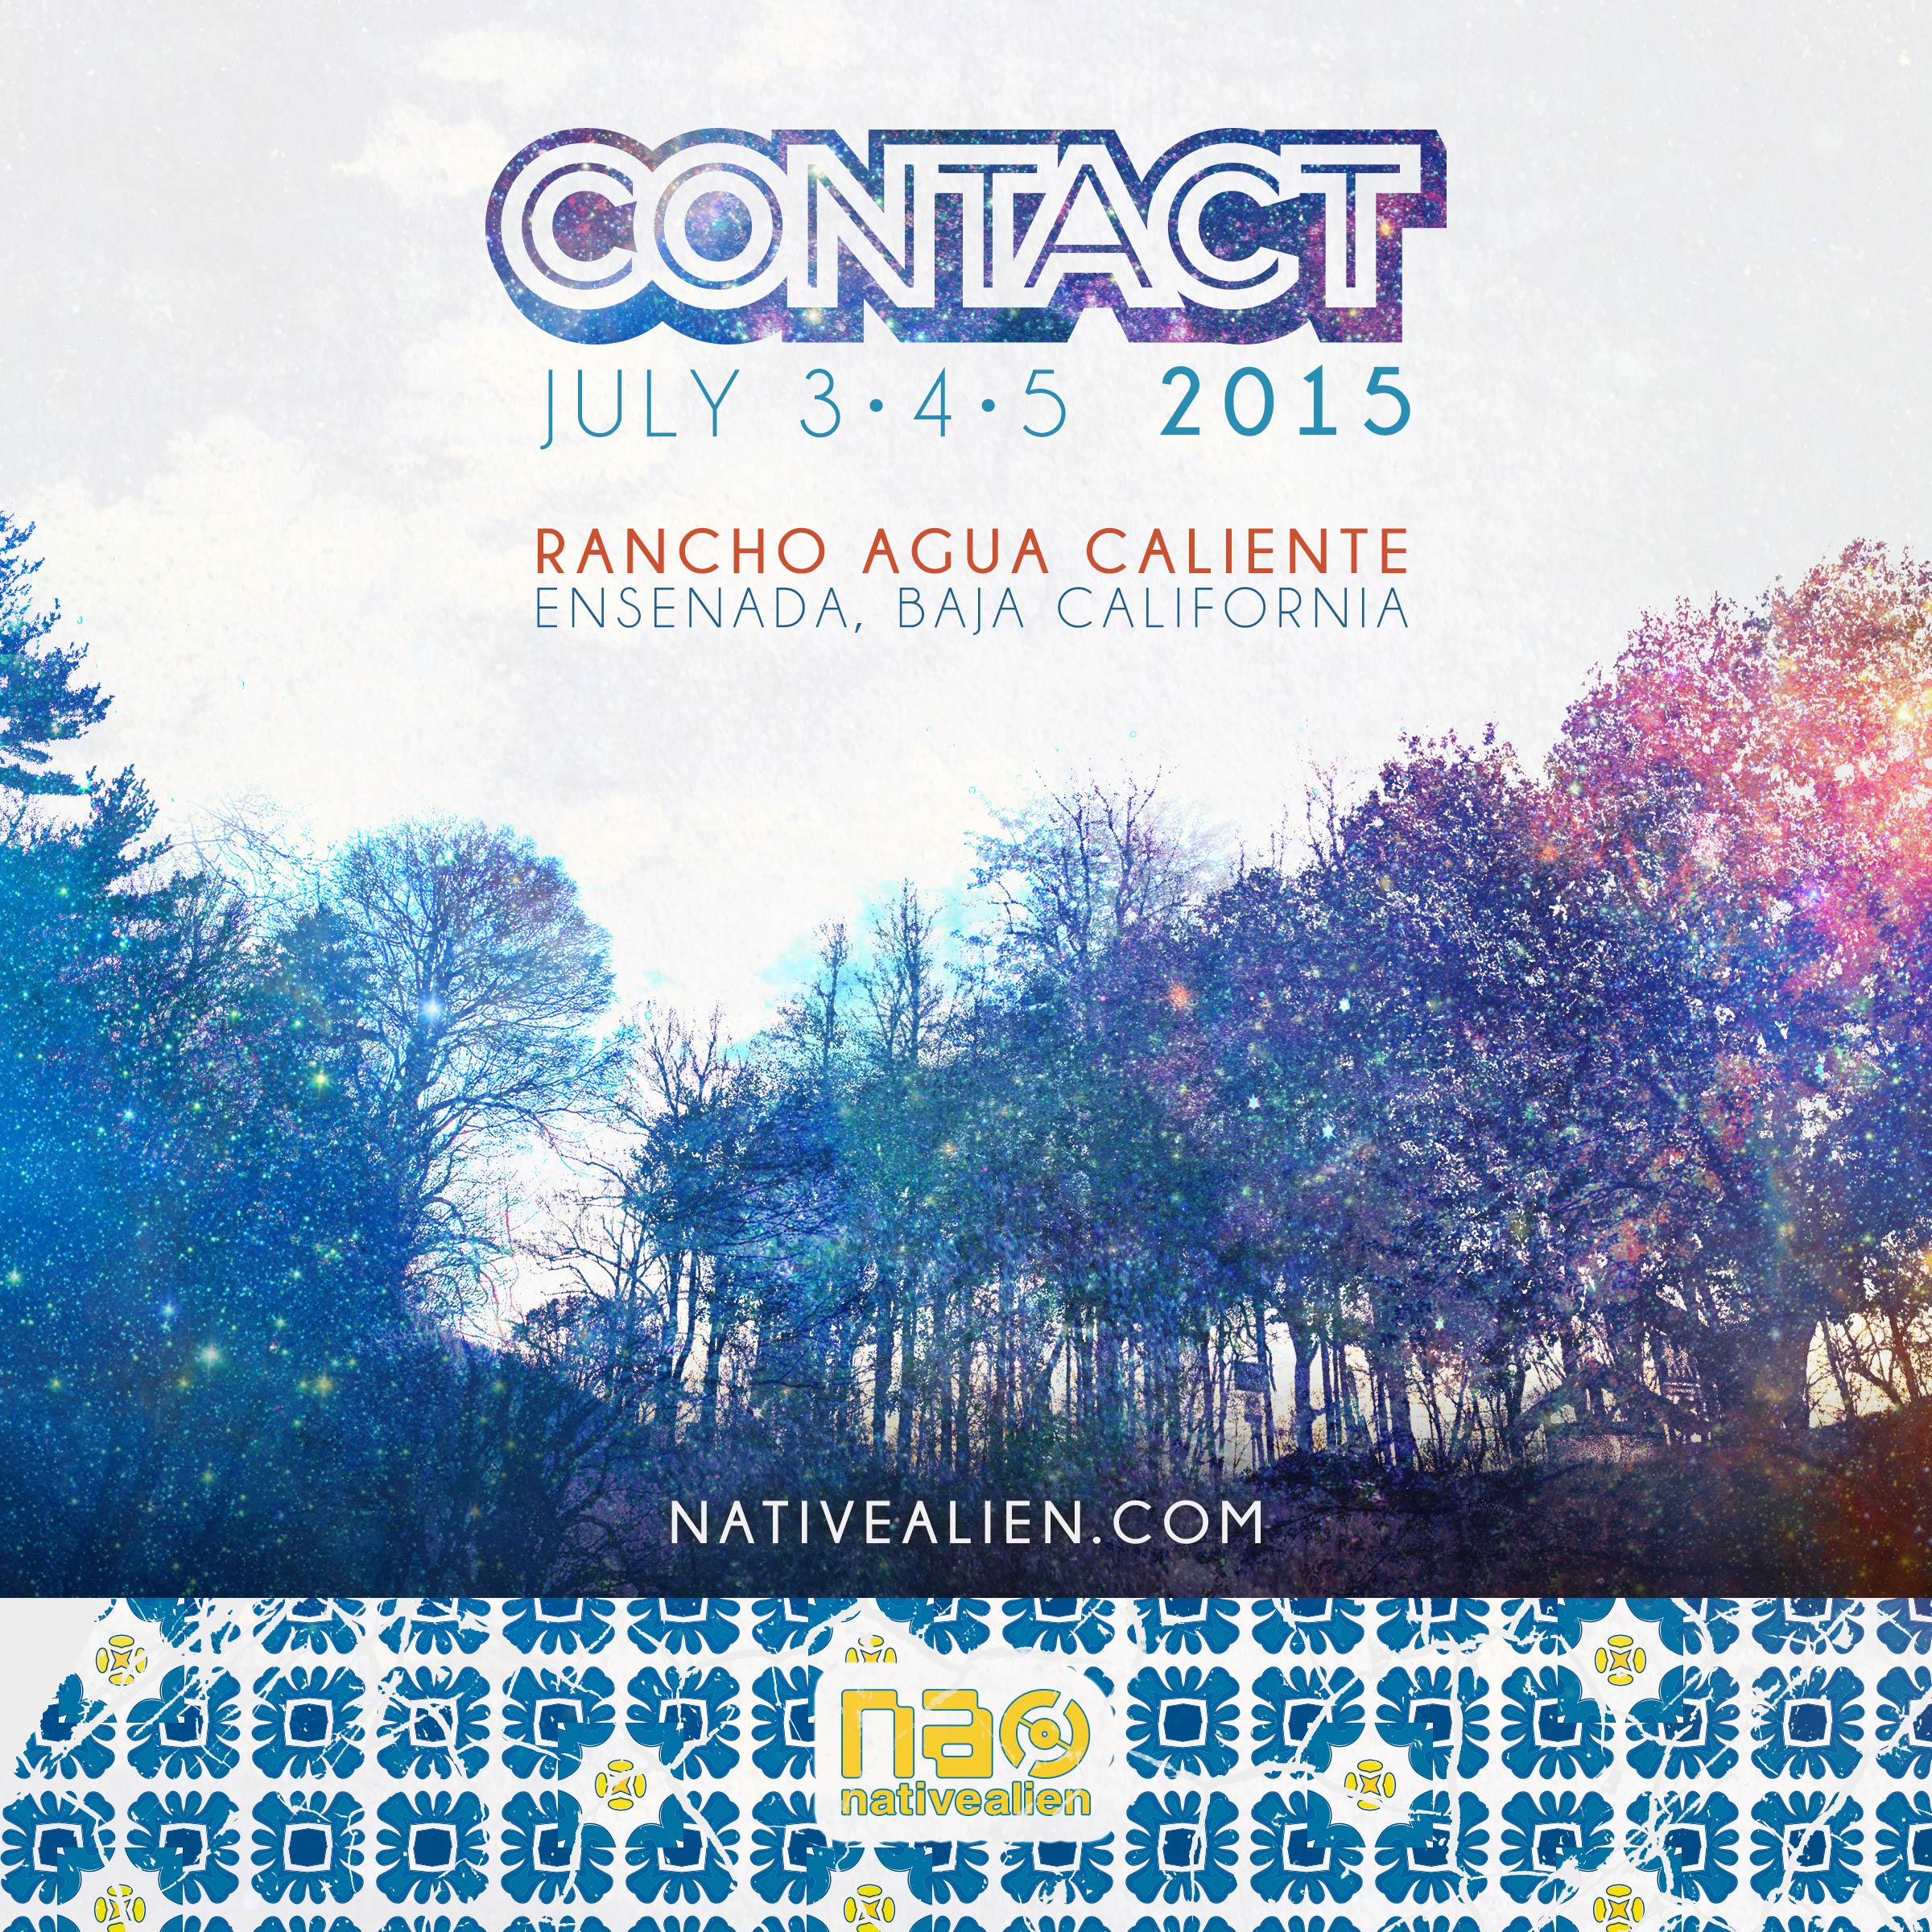 native alien contact 2015